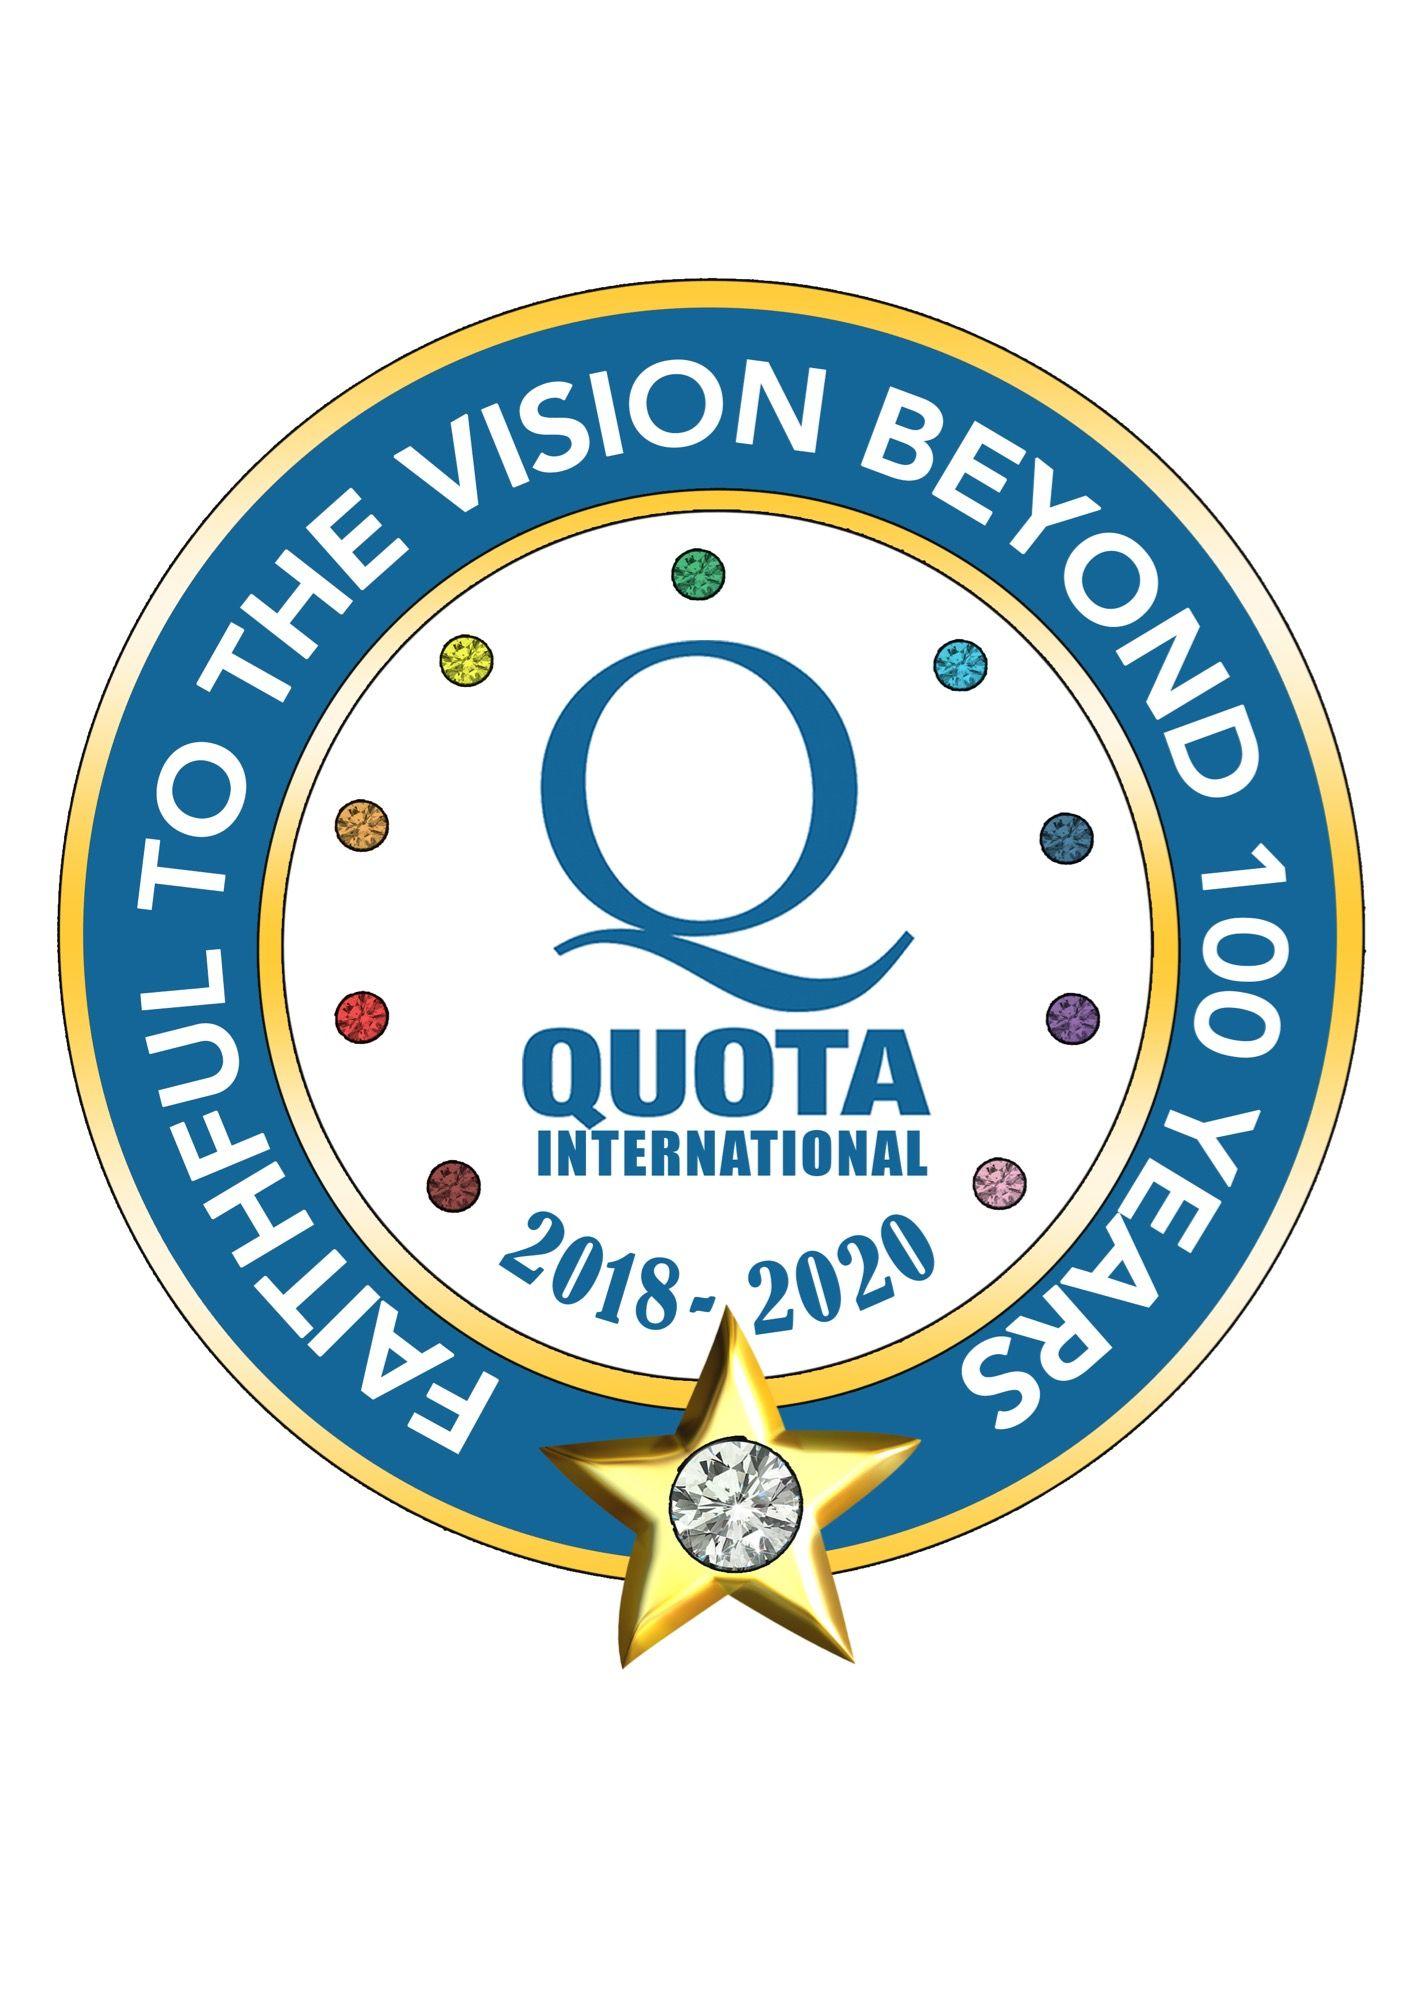 Quota Logo - Home - Quota International